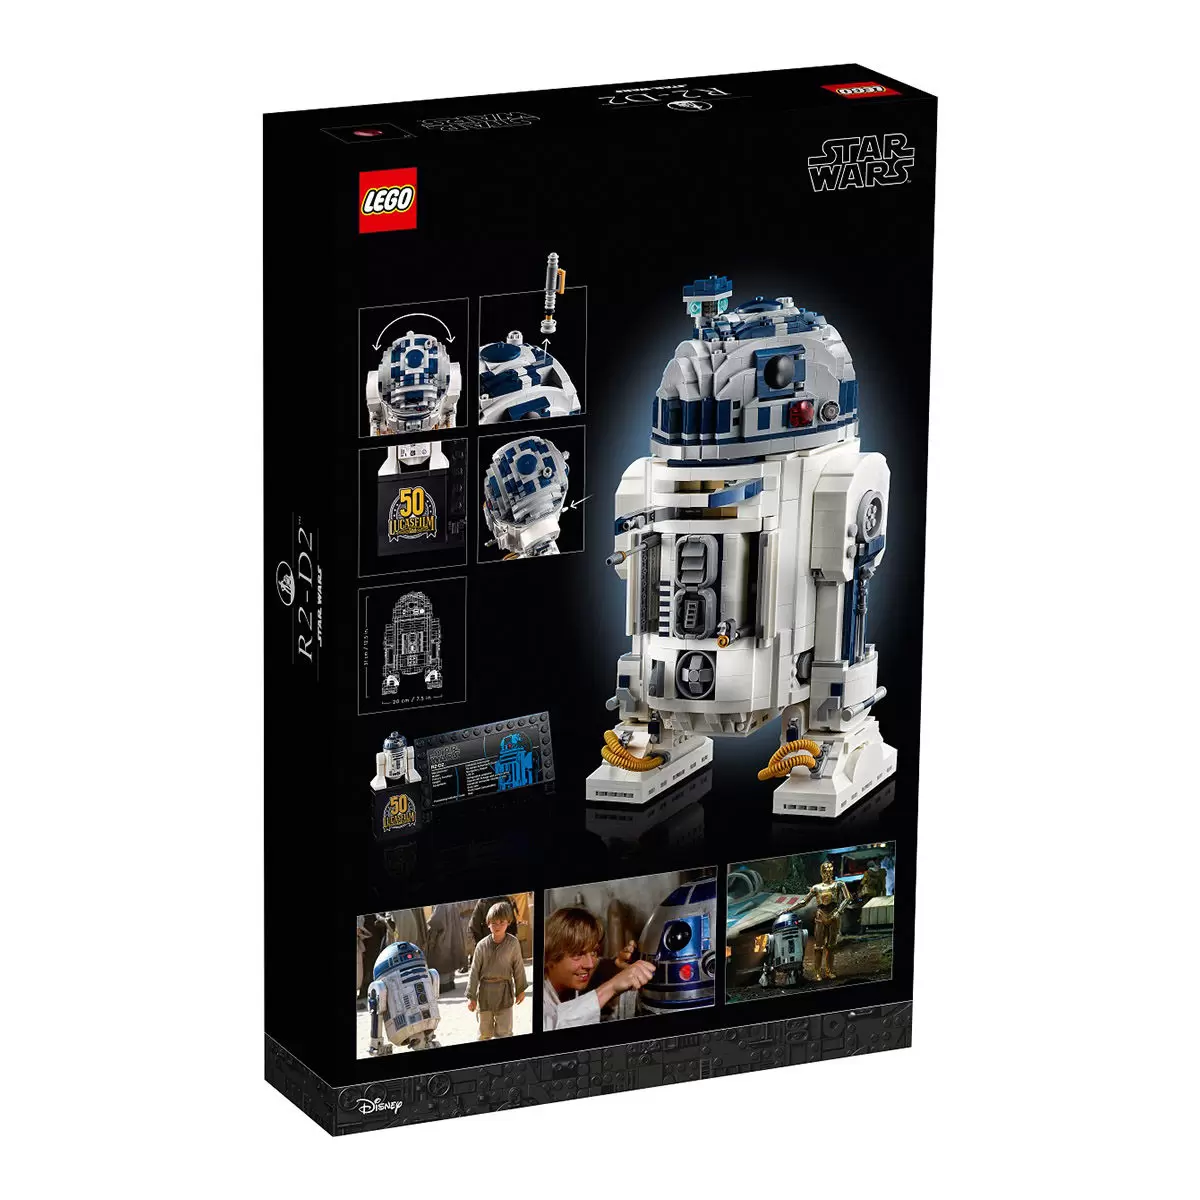 LEGO 星際大戰系列 R2-D2 75308